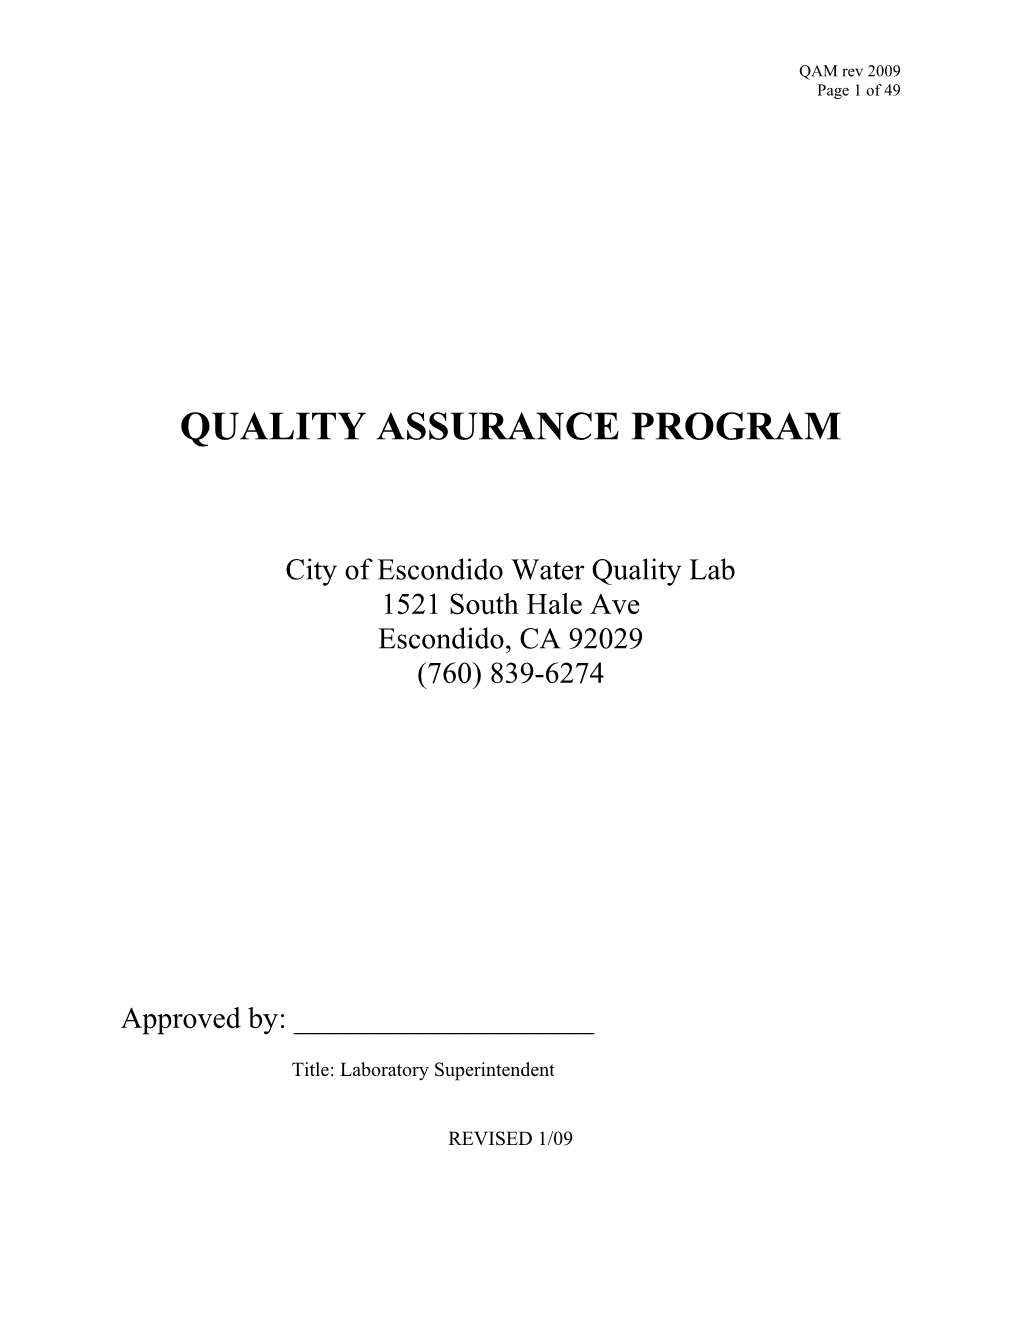 Qualityassurance Program